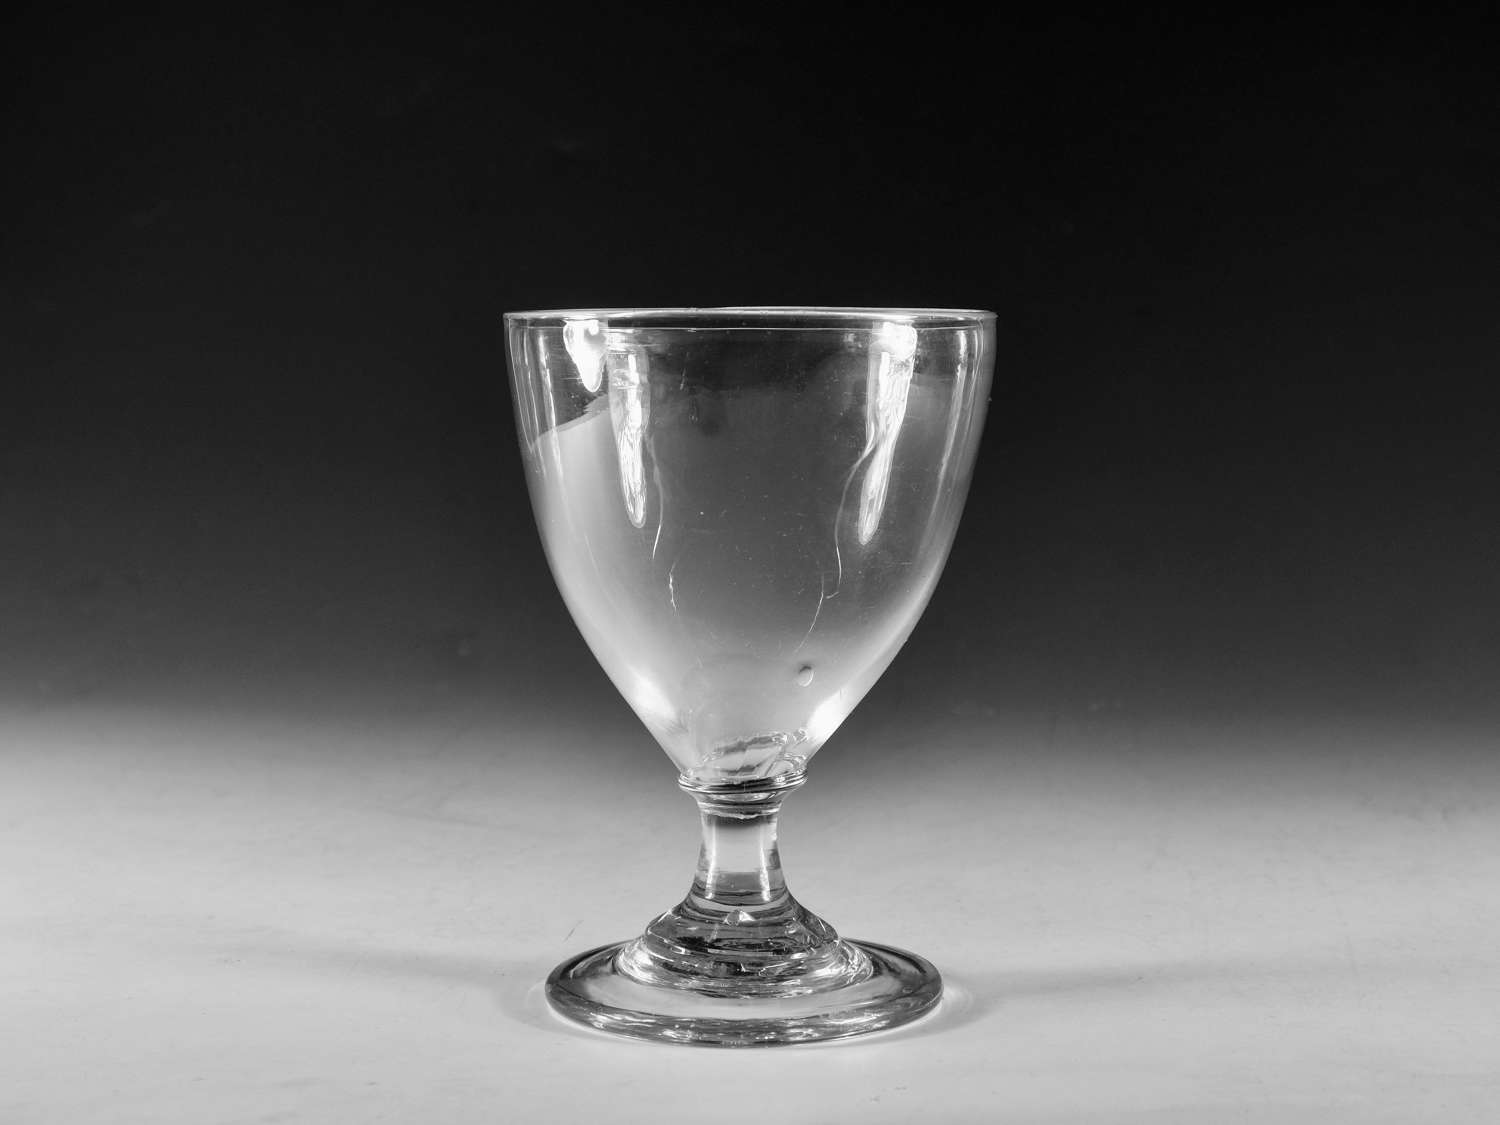 Antique glass rummer ovoid English c1790